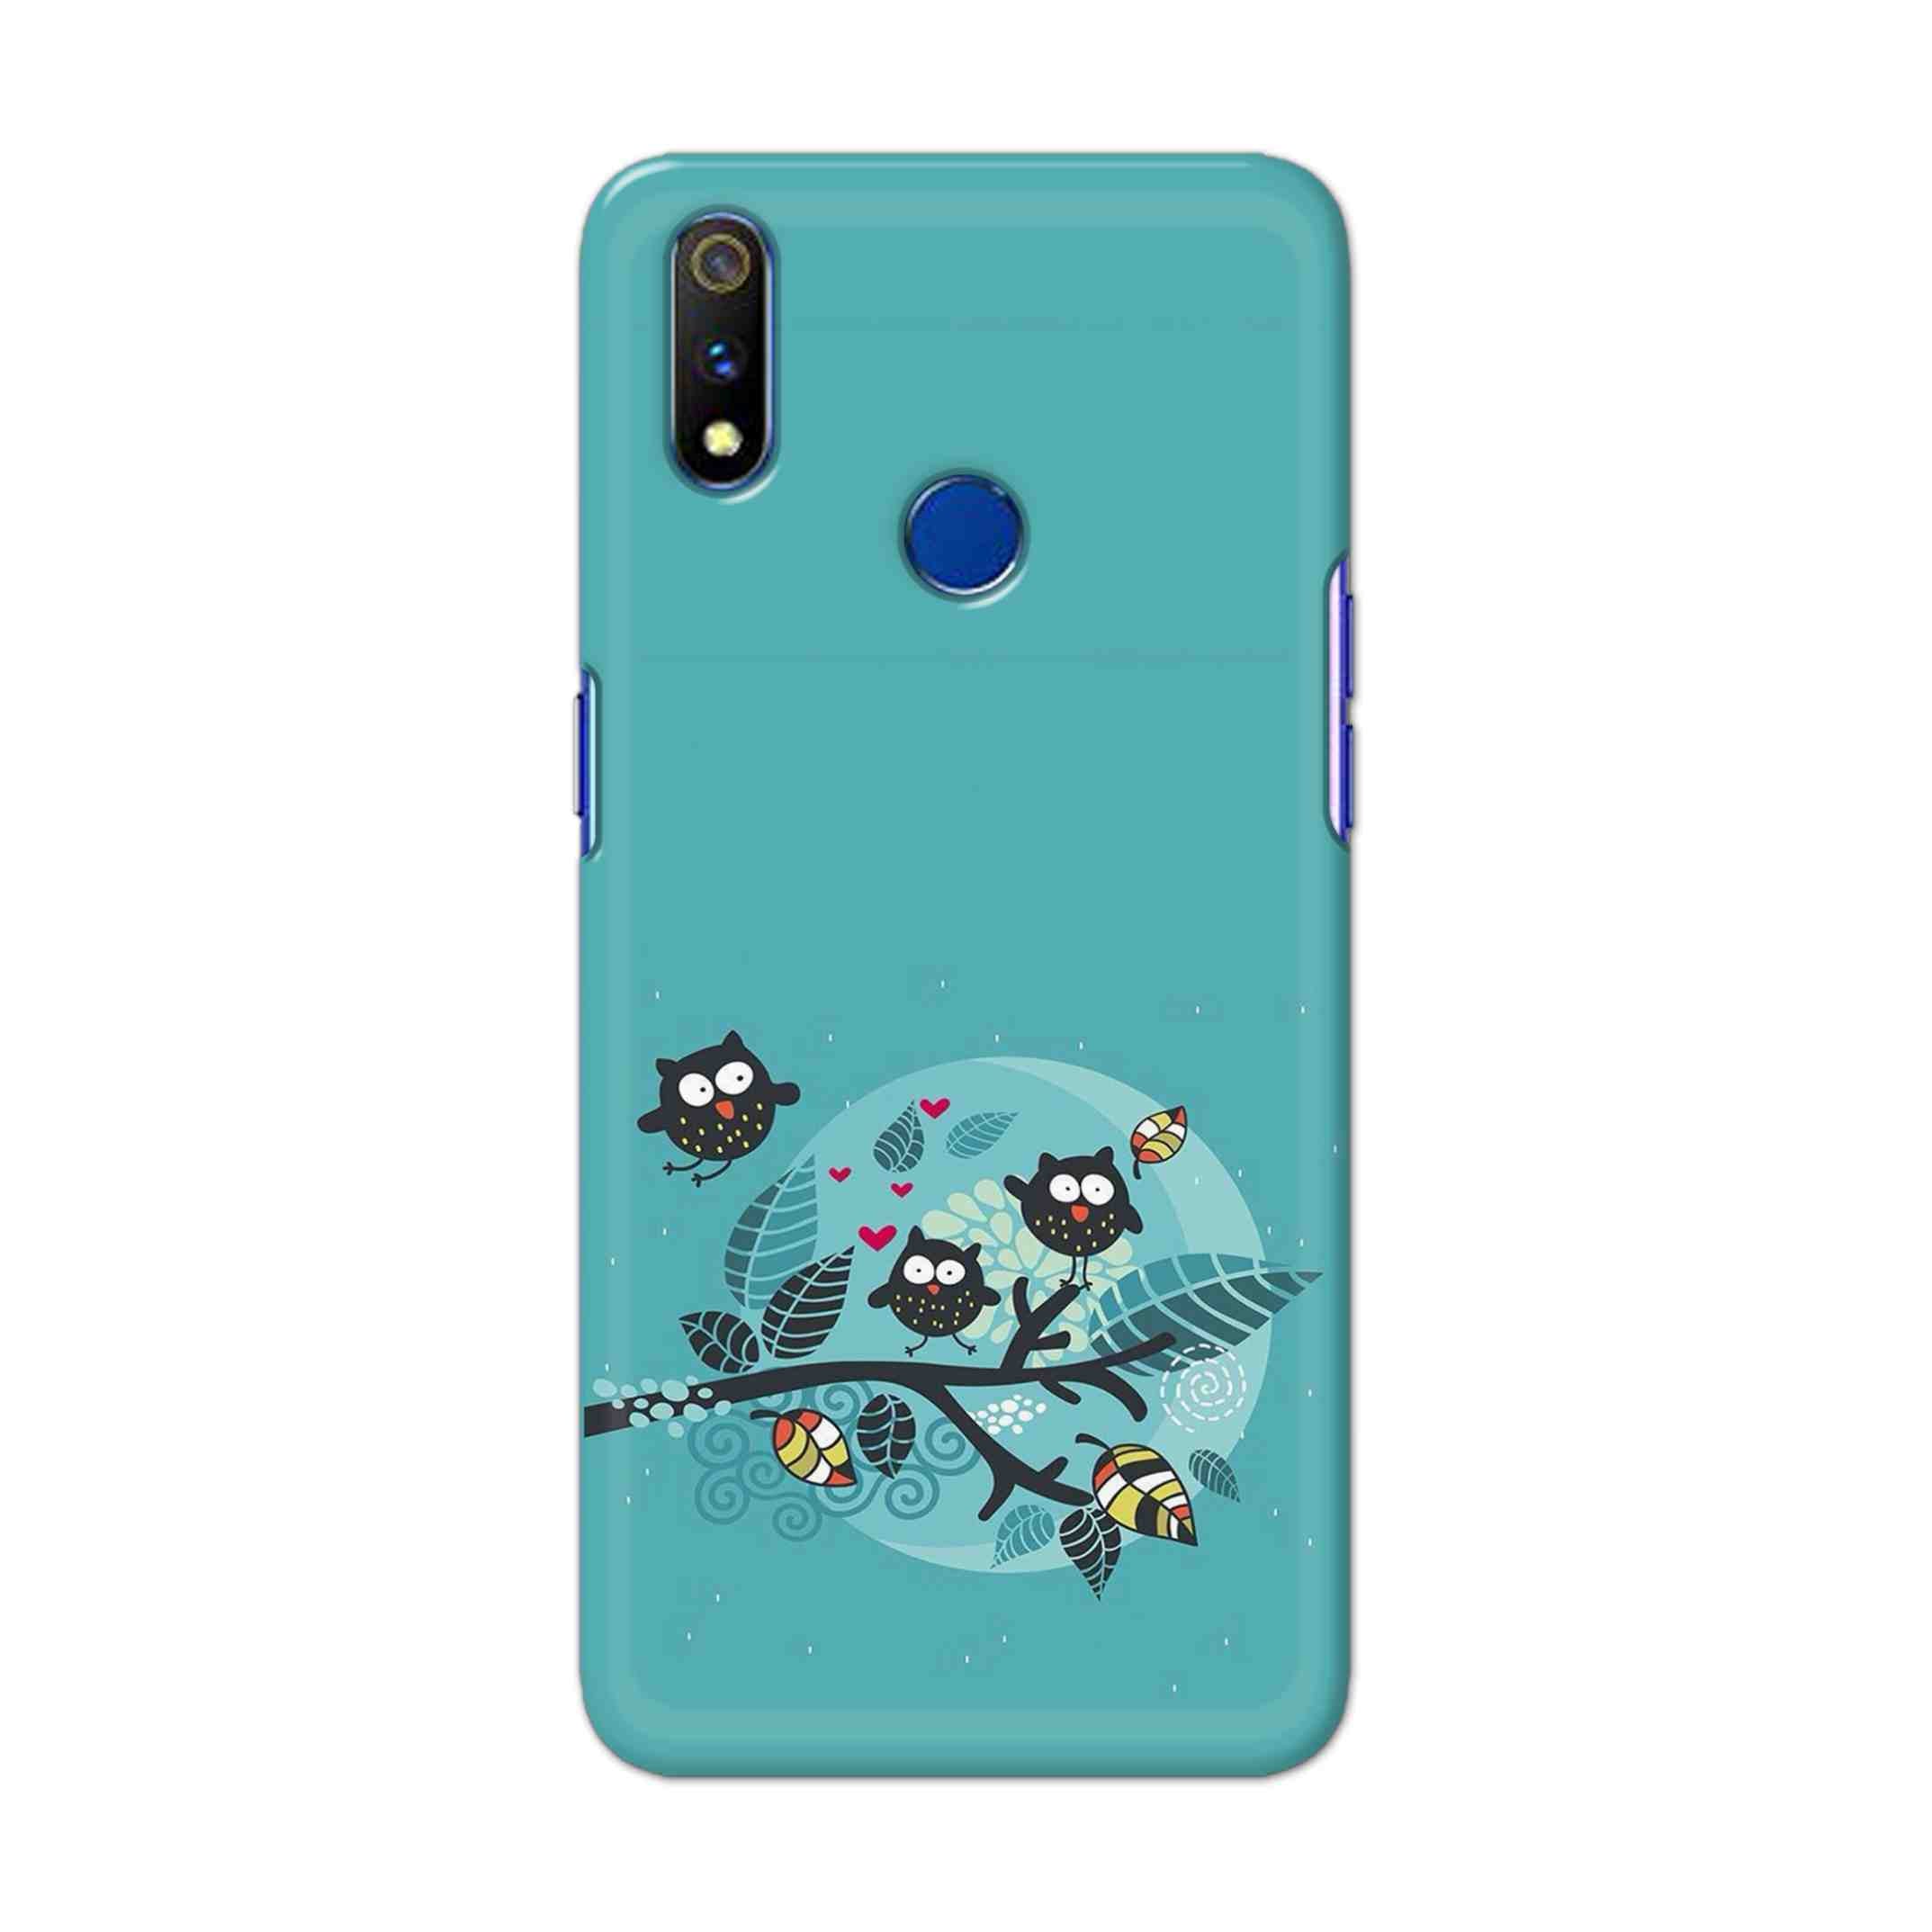 Buy Owl Hard Back Mobile Phone Case Cover For Realme 3 Pro Online